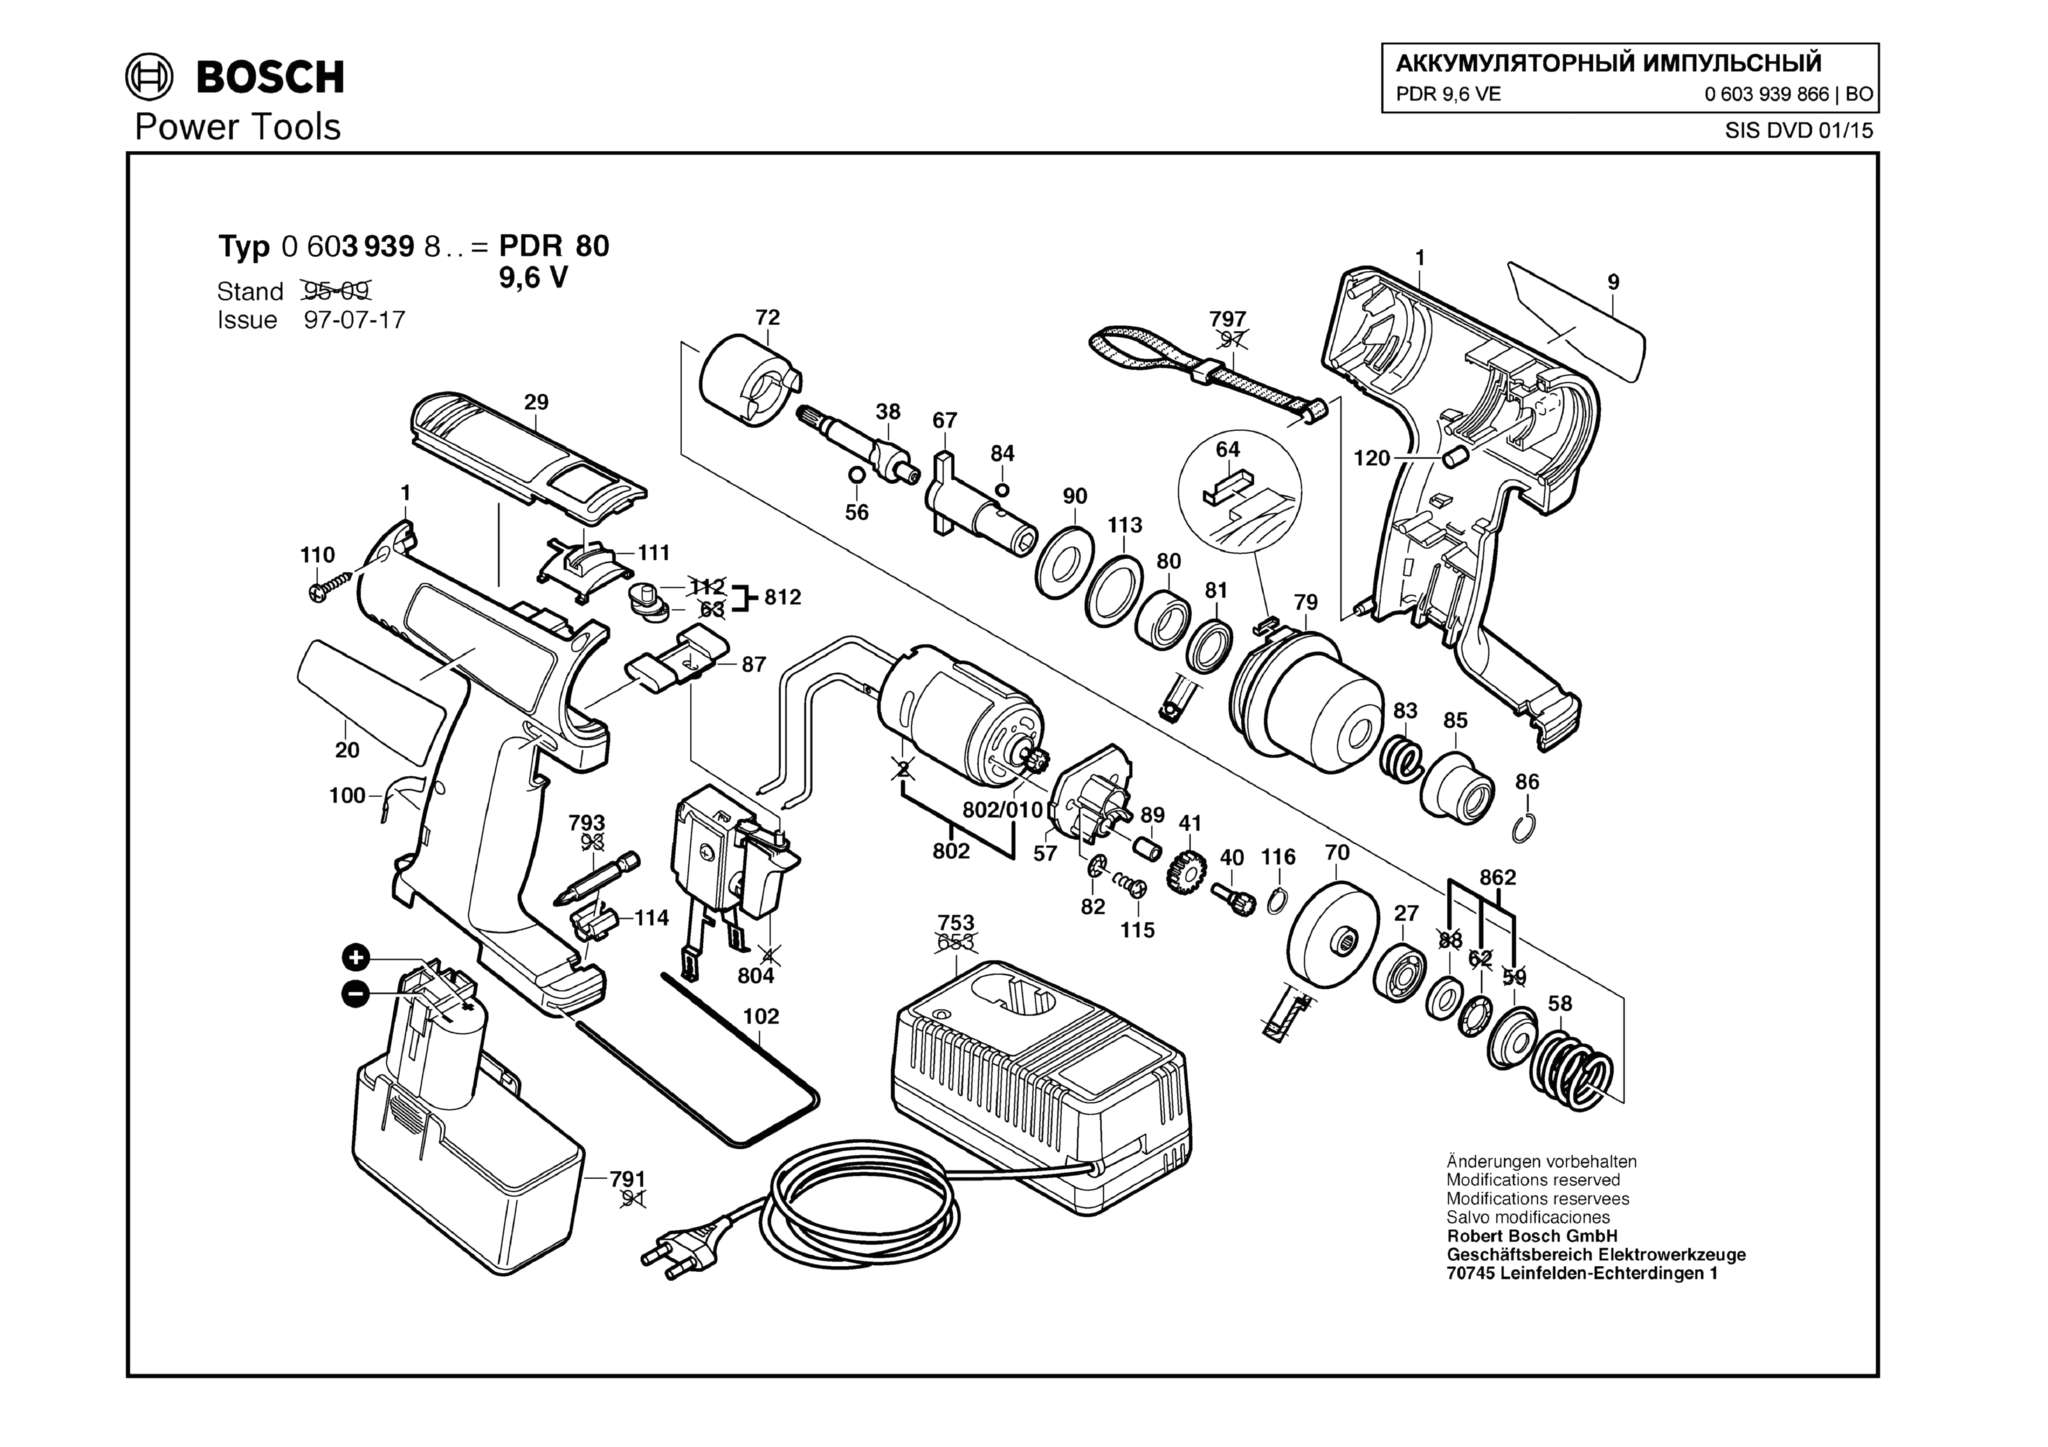 Запчасти, схема и деталировка Bosch PDR 9,6 VE (ТИП 0603939866)